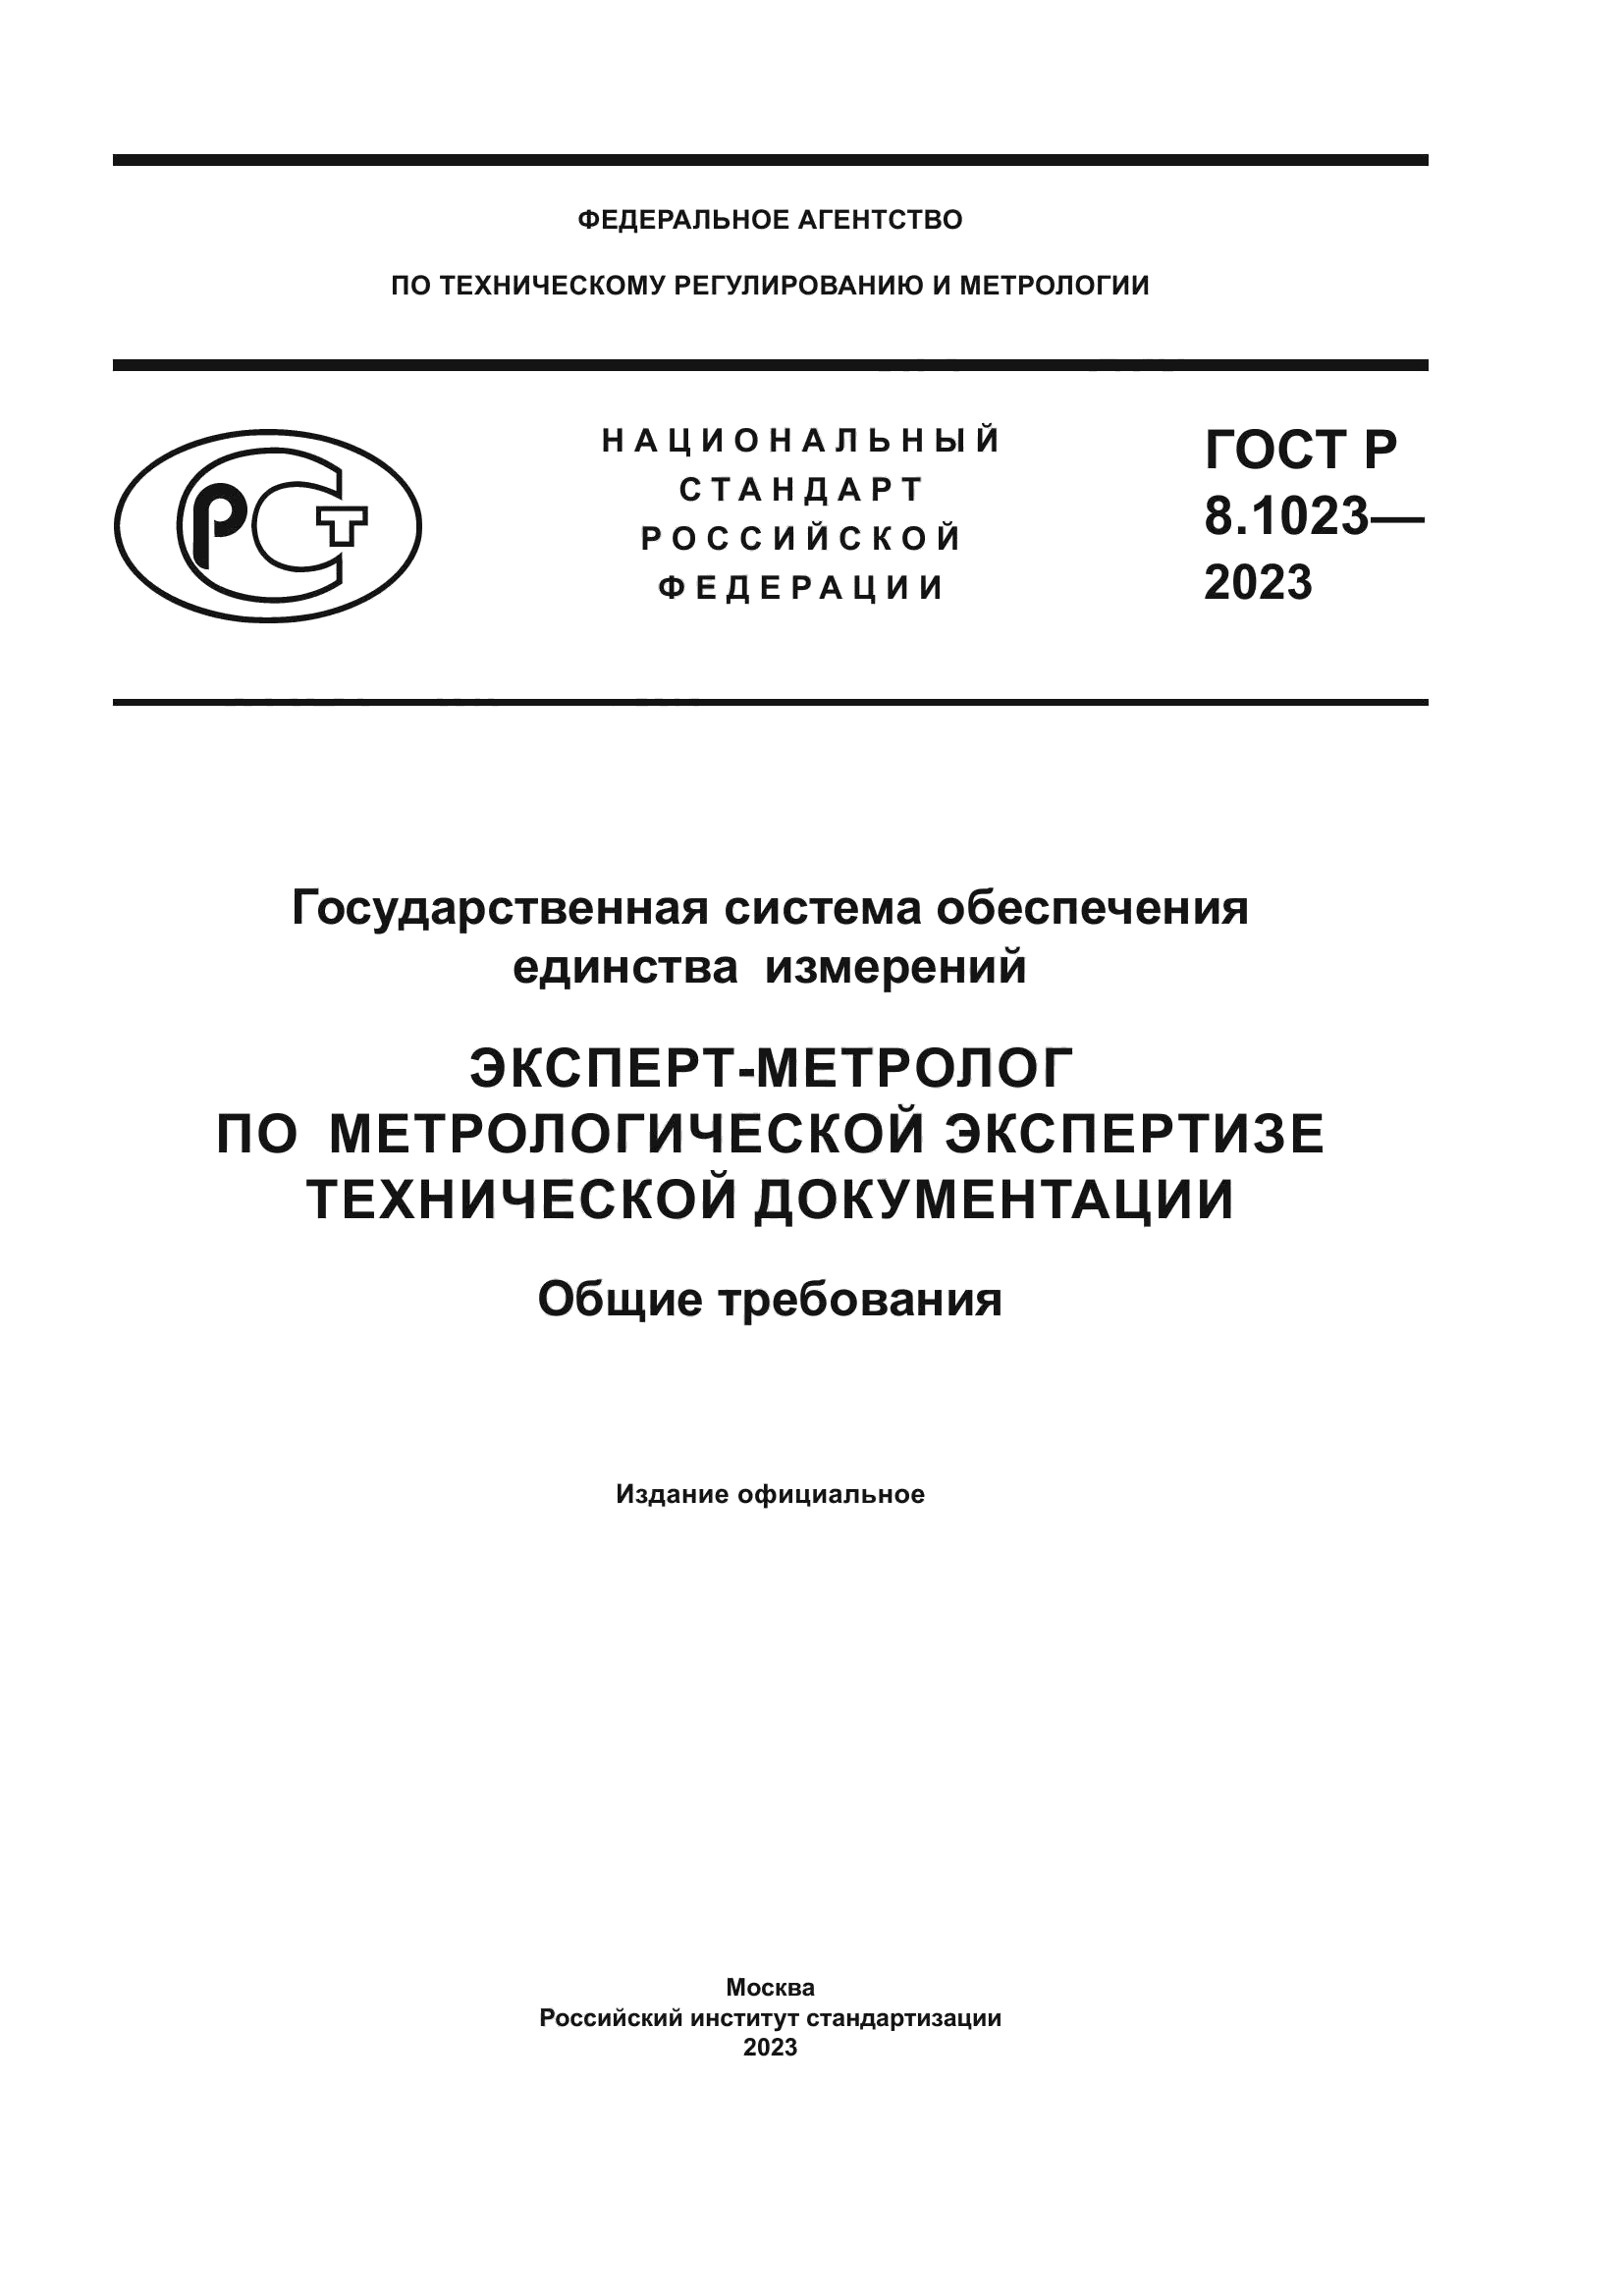 ГОСТ Р 8.1023-2023